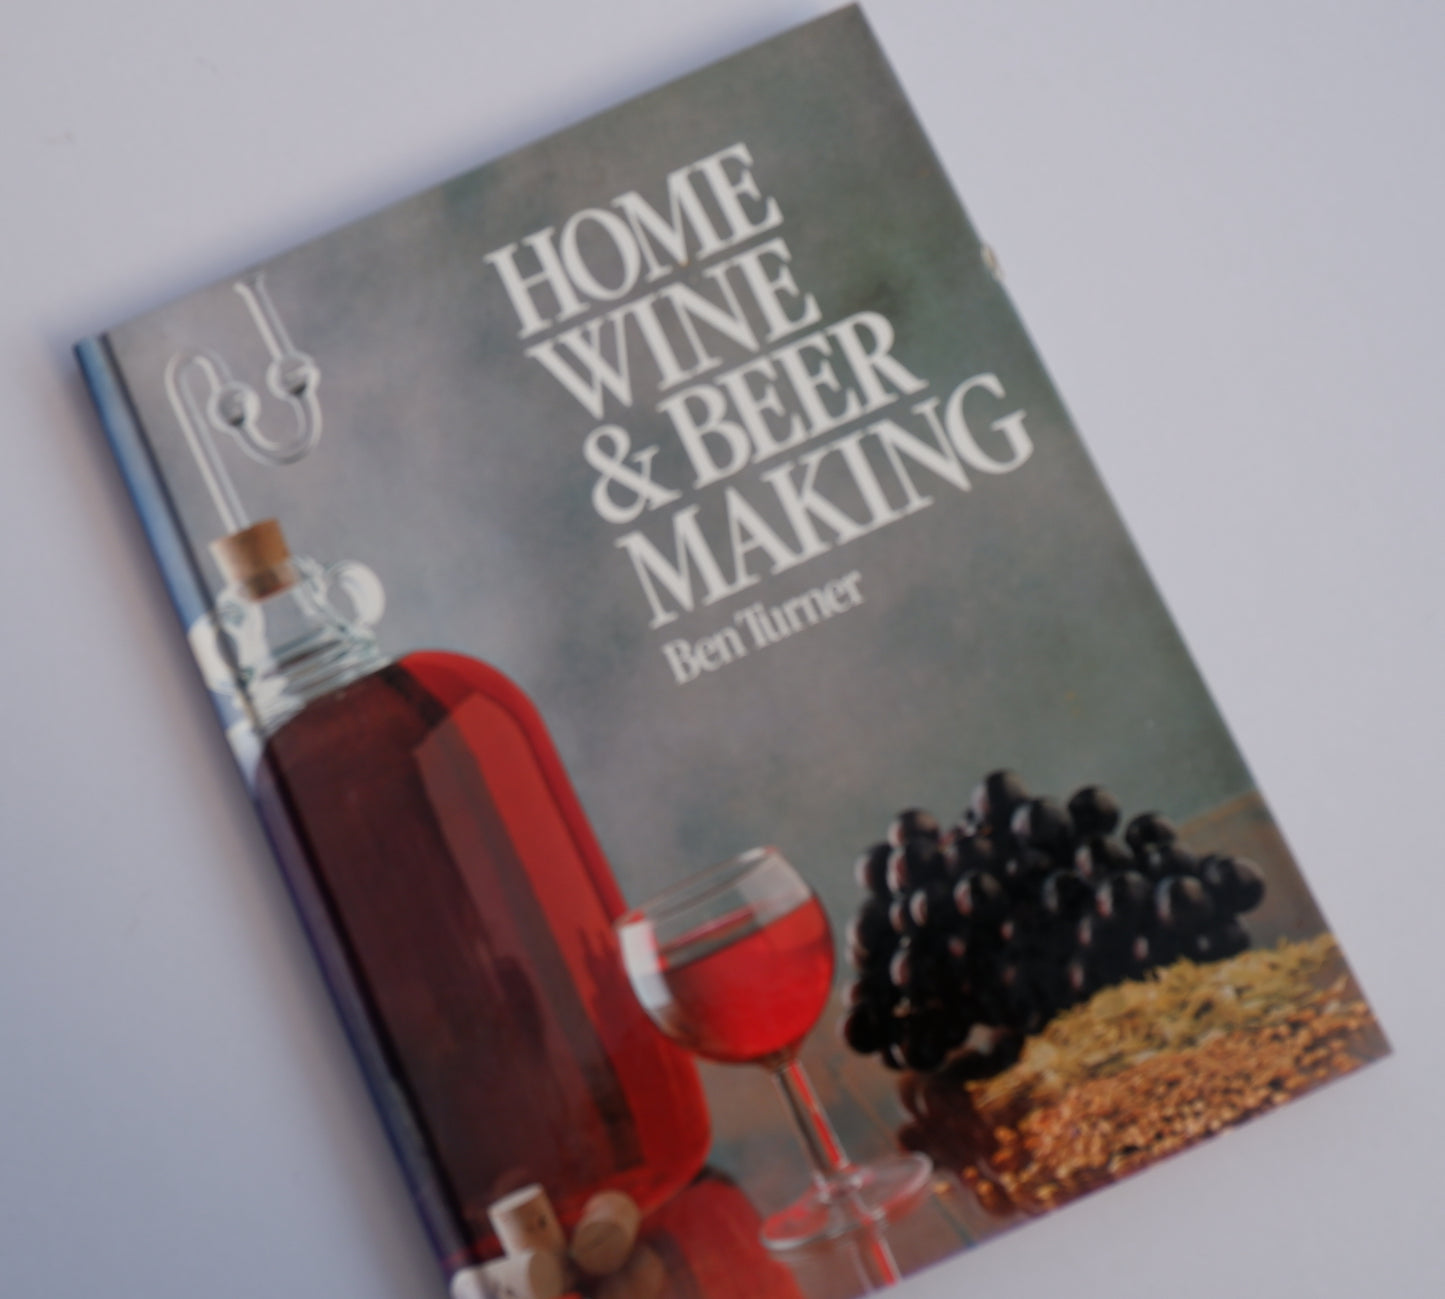 Home Wine & Beer Making - Ben Turner